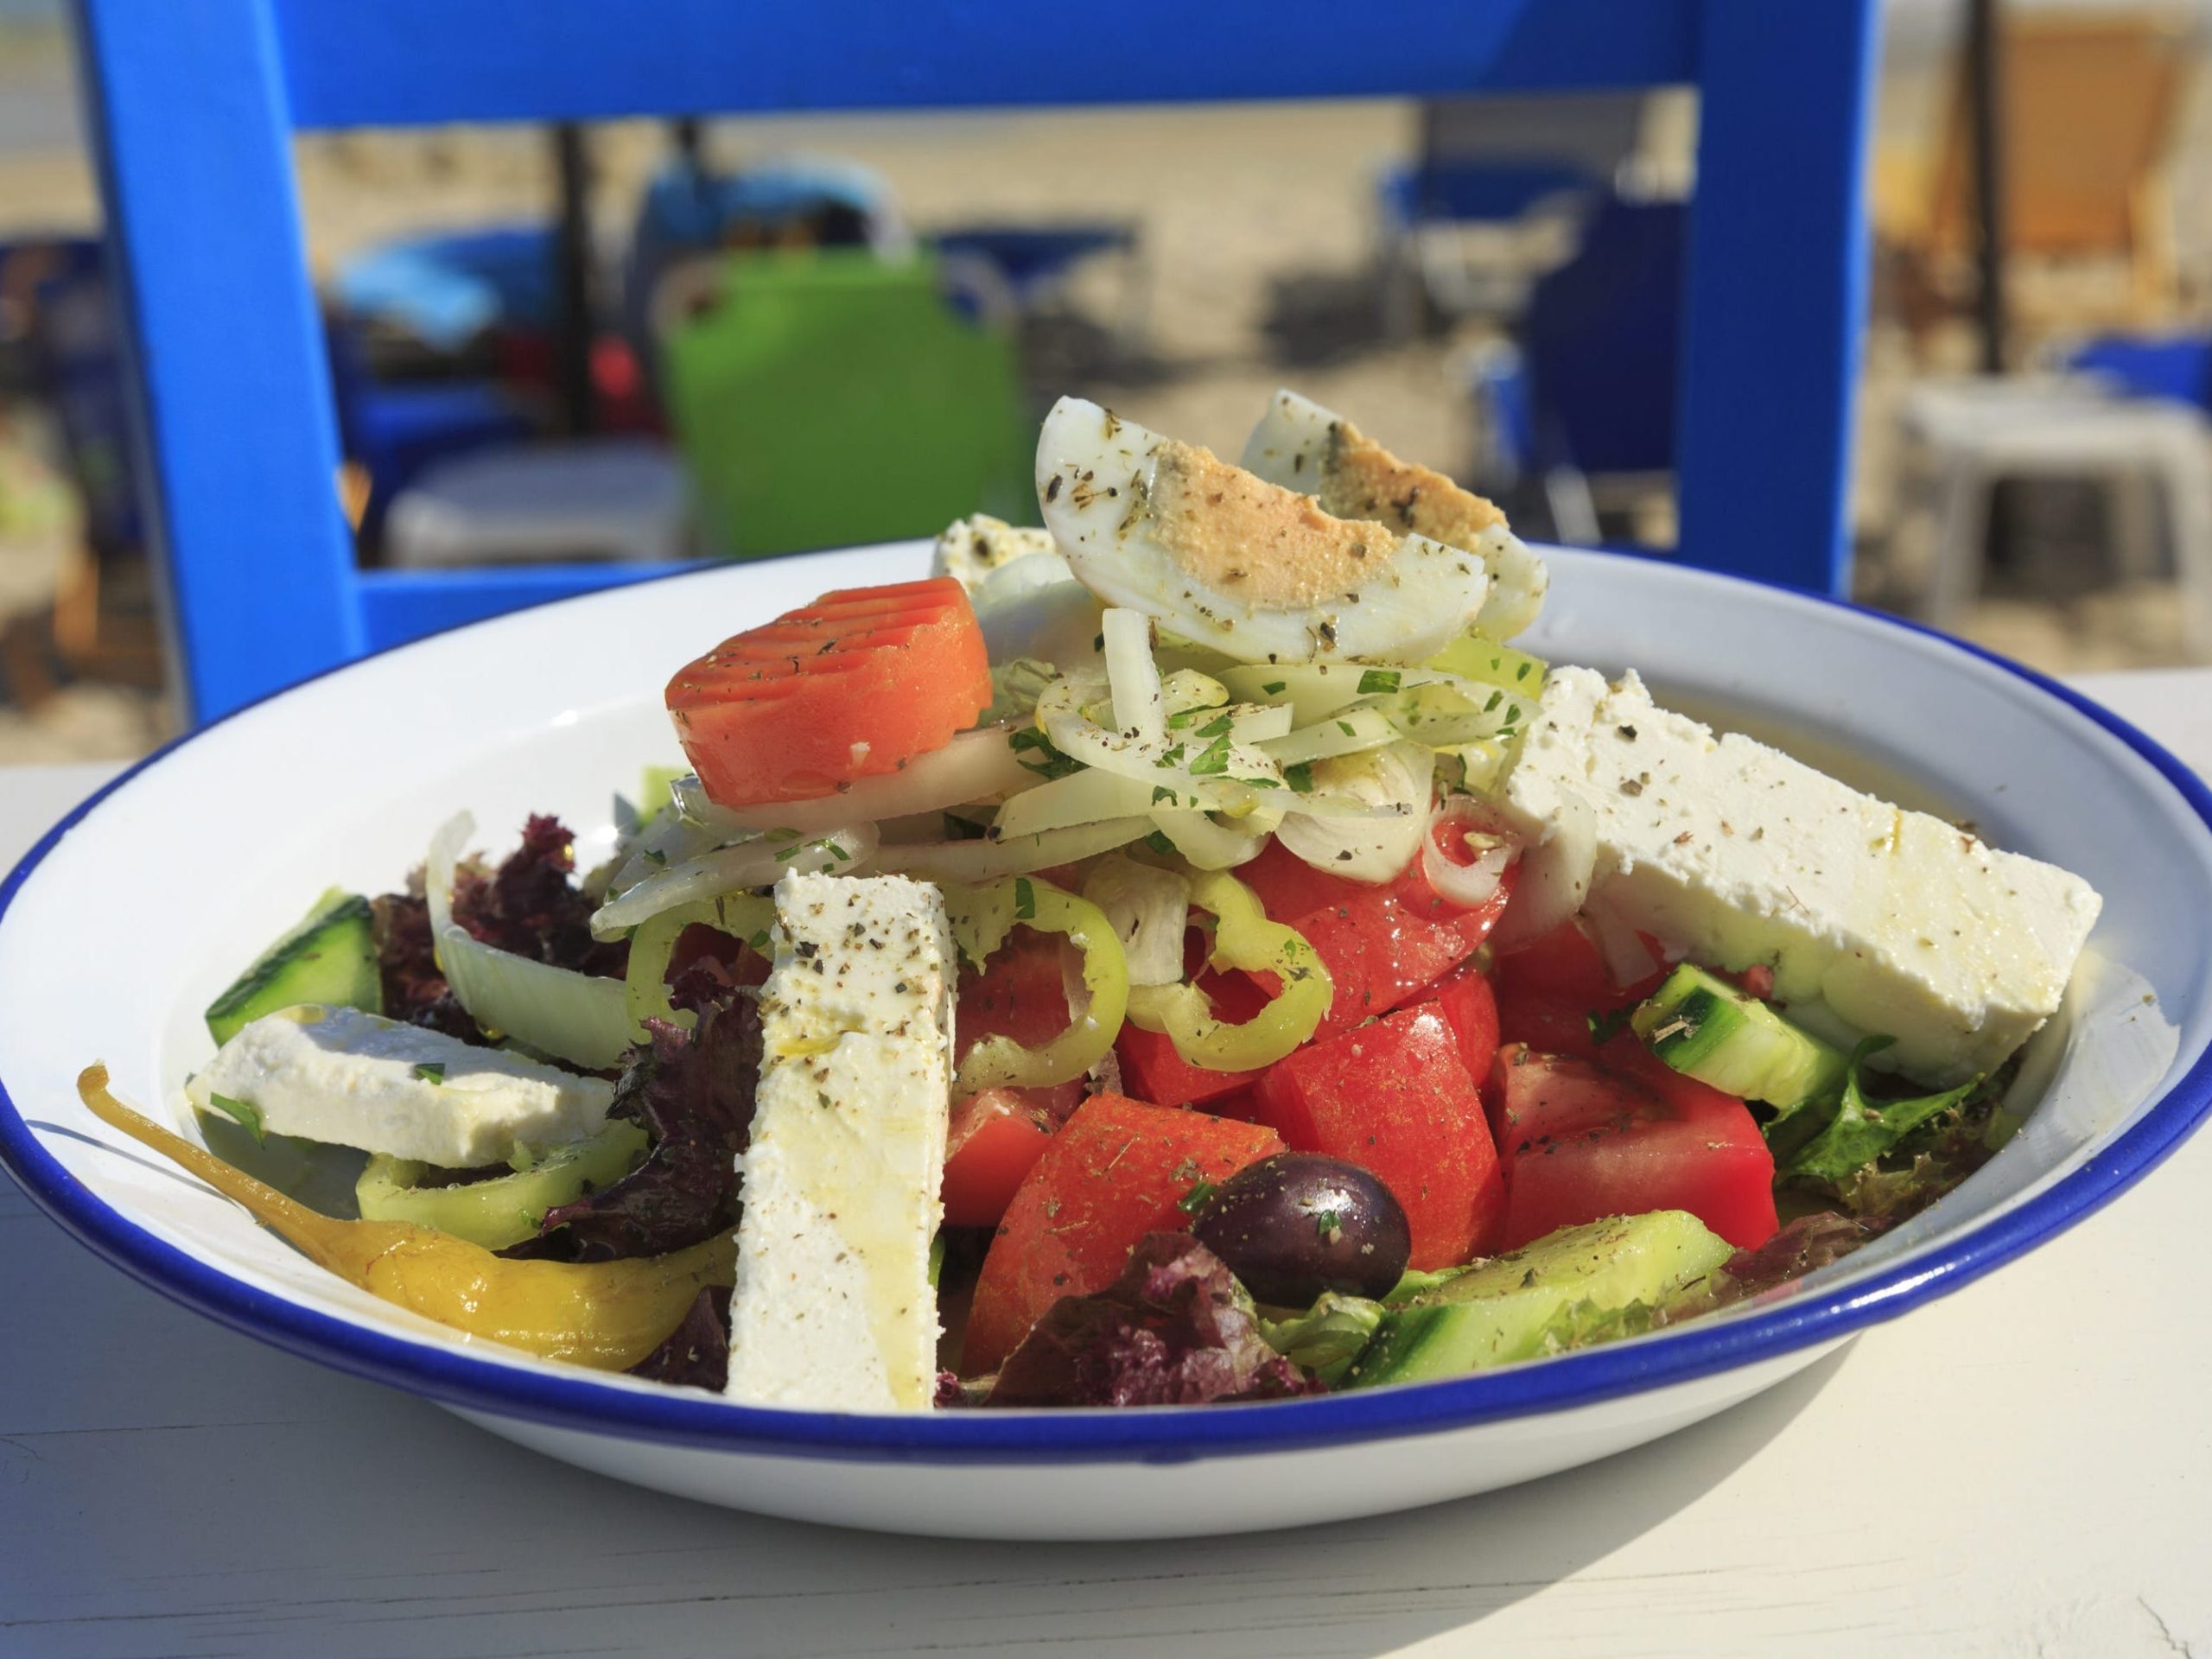 Greek salad is crisp and fresh.